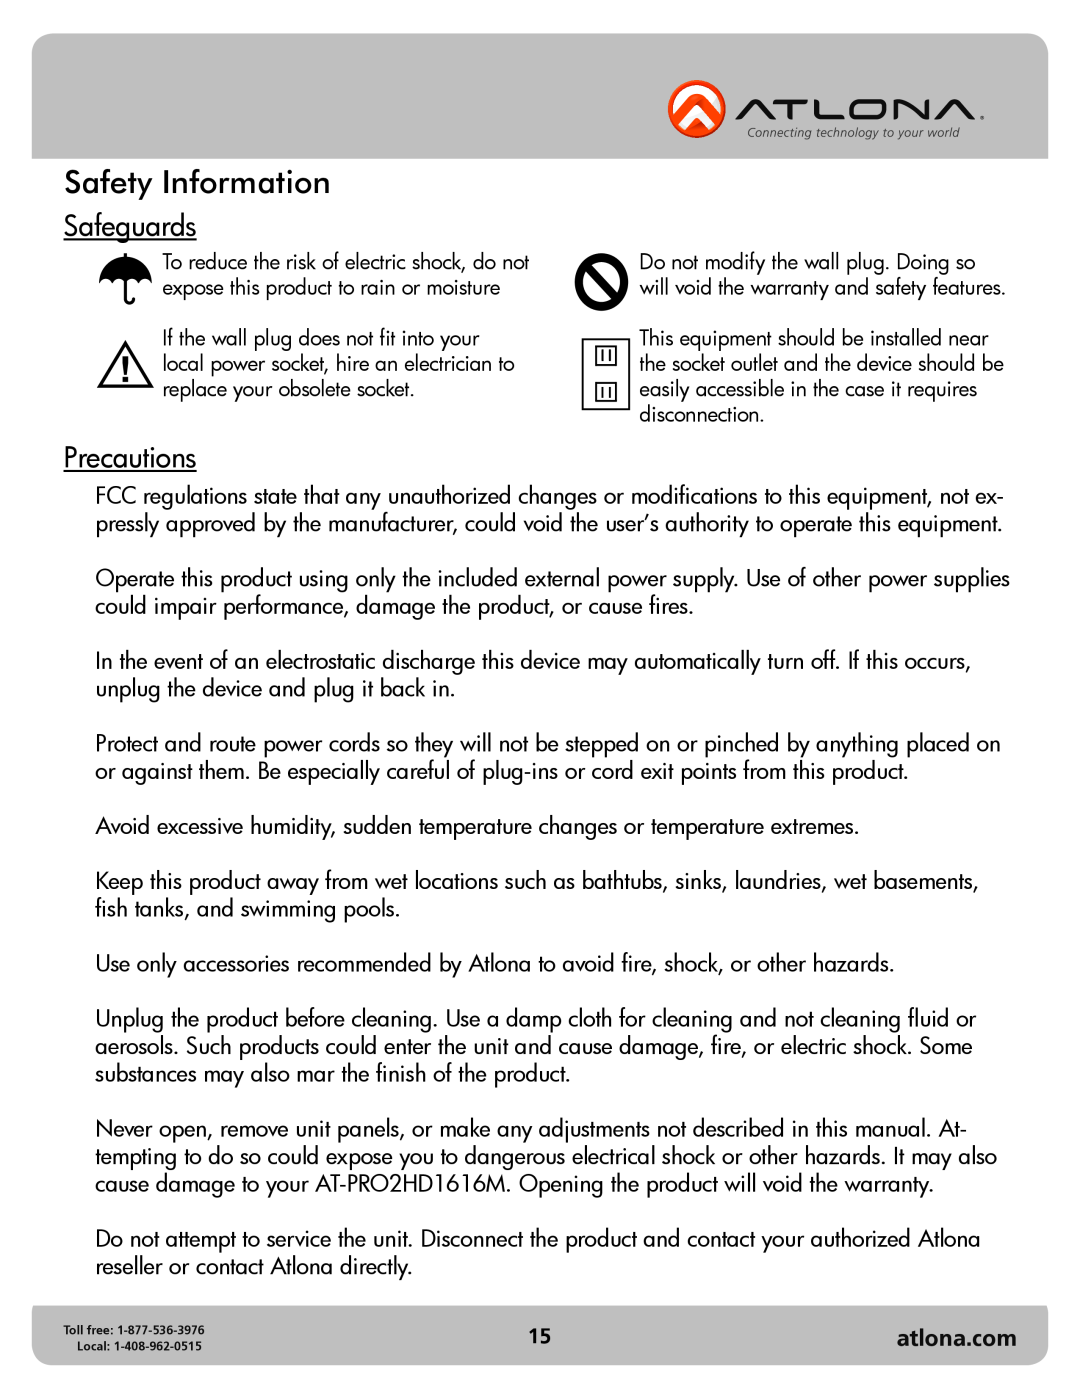 Atlona AT-PRO2HD1616M user manual Safety Information, Safeguards, Precautions, atlona.com 